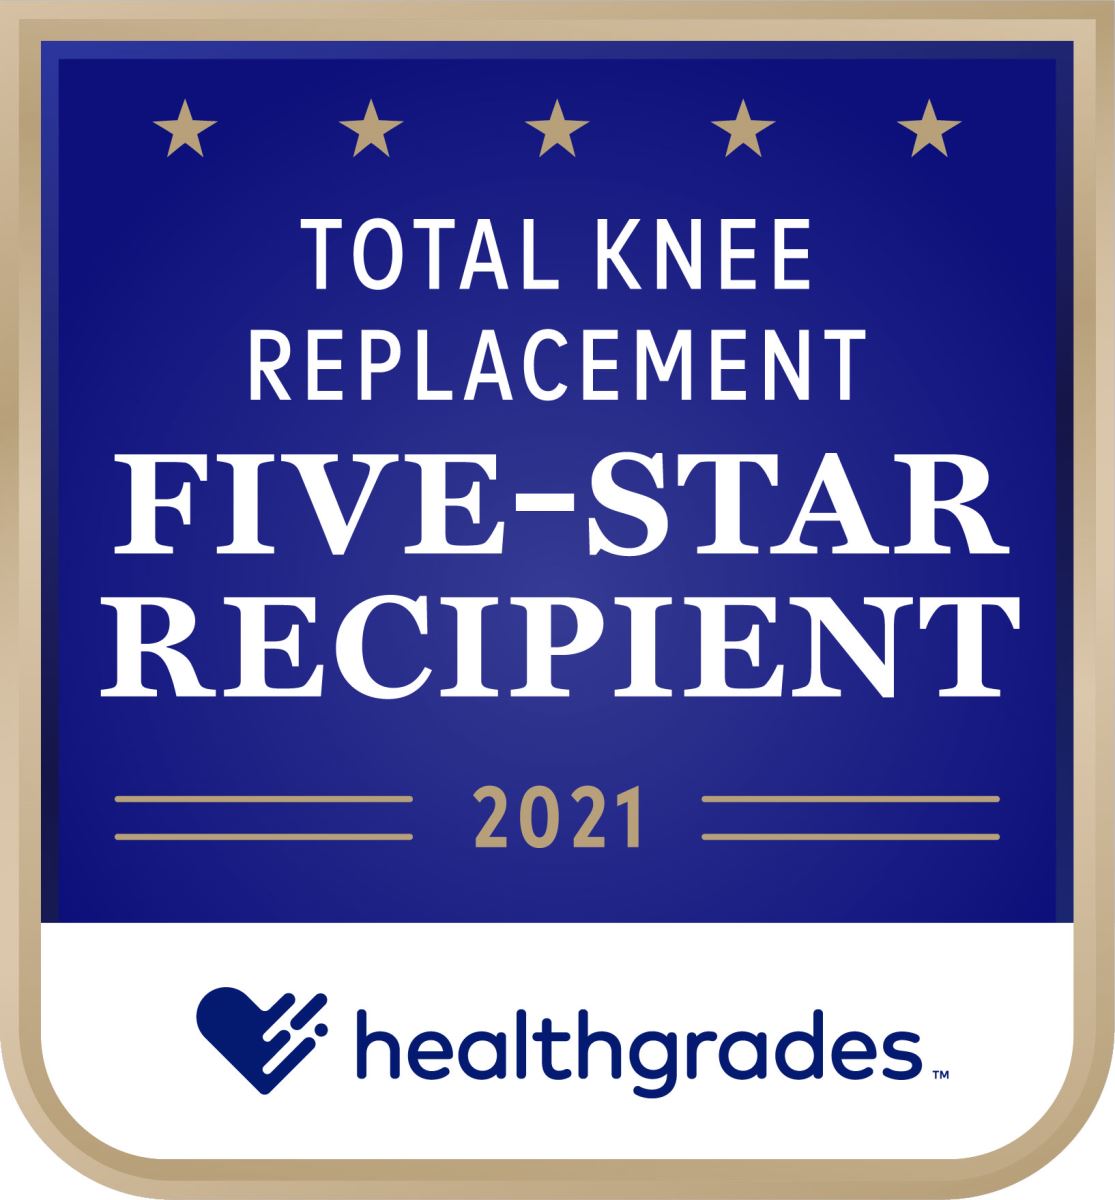 Total Knee Replacement Five-Star Recipient 2021